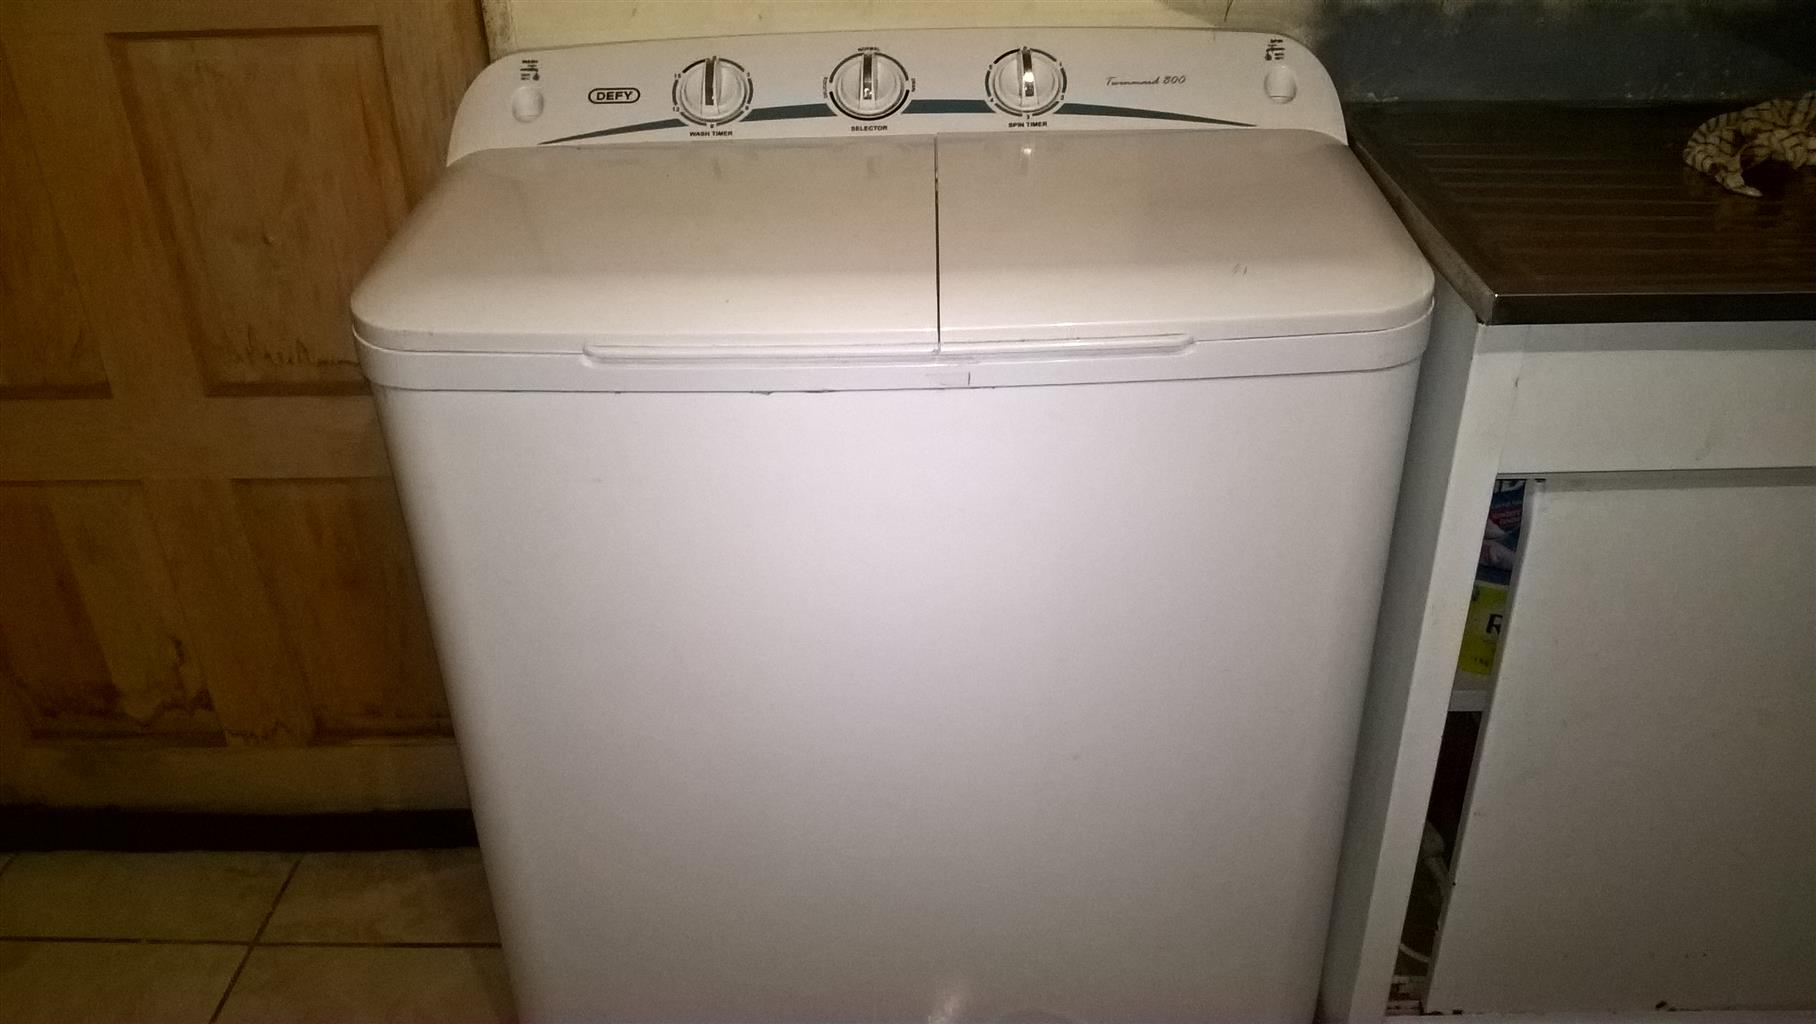 Defy Washing machine for sale.